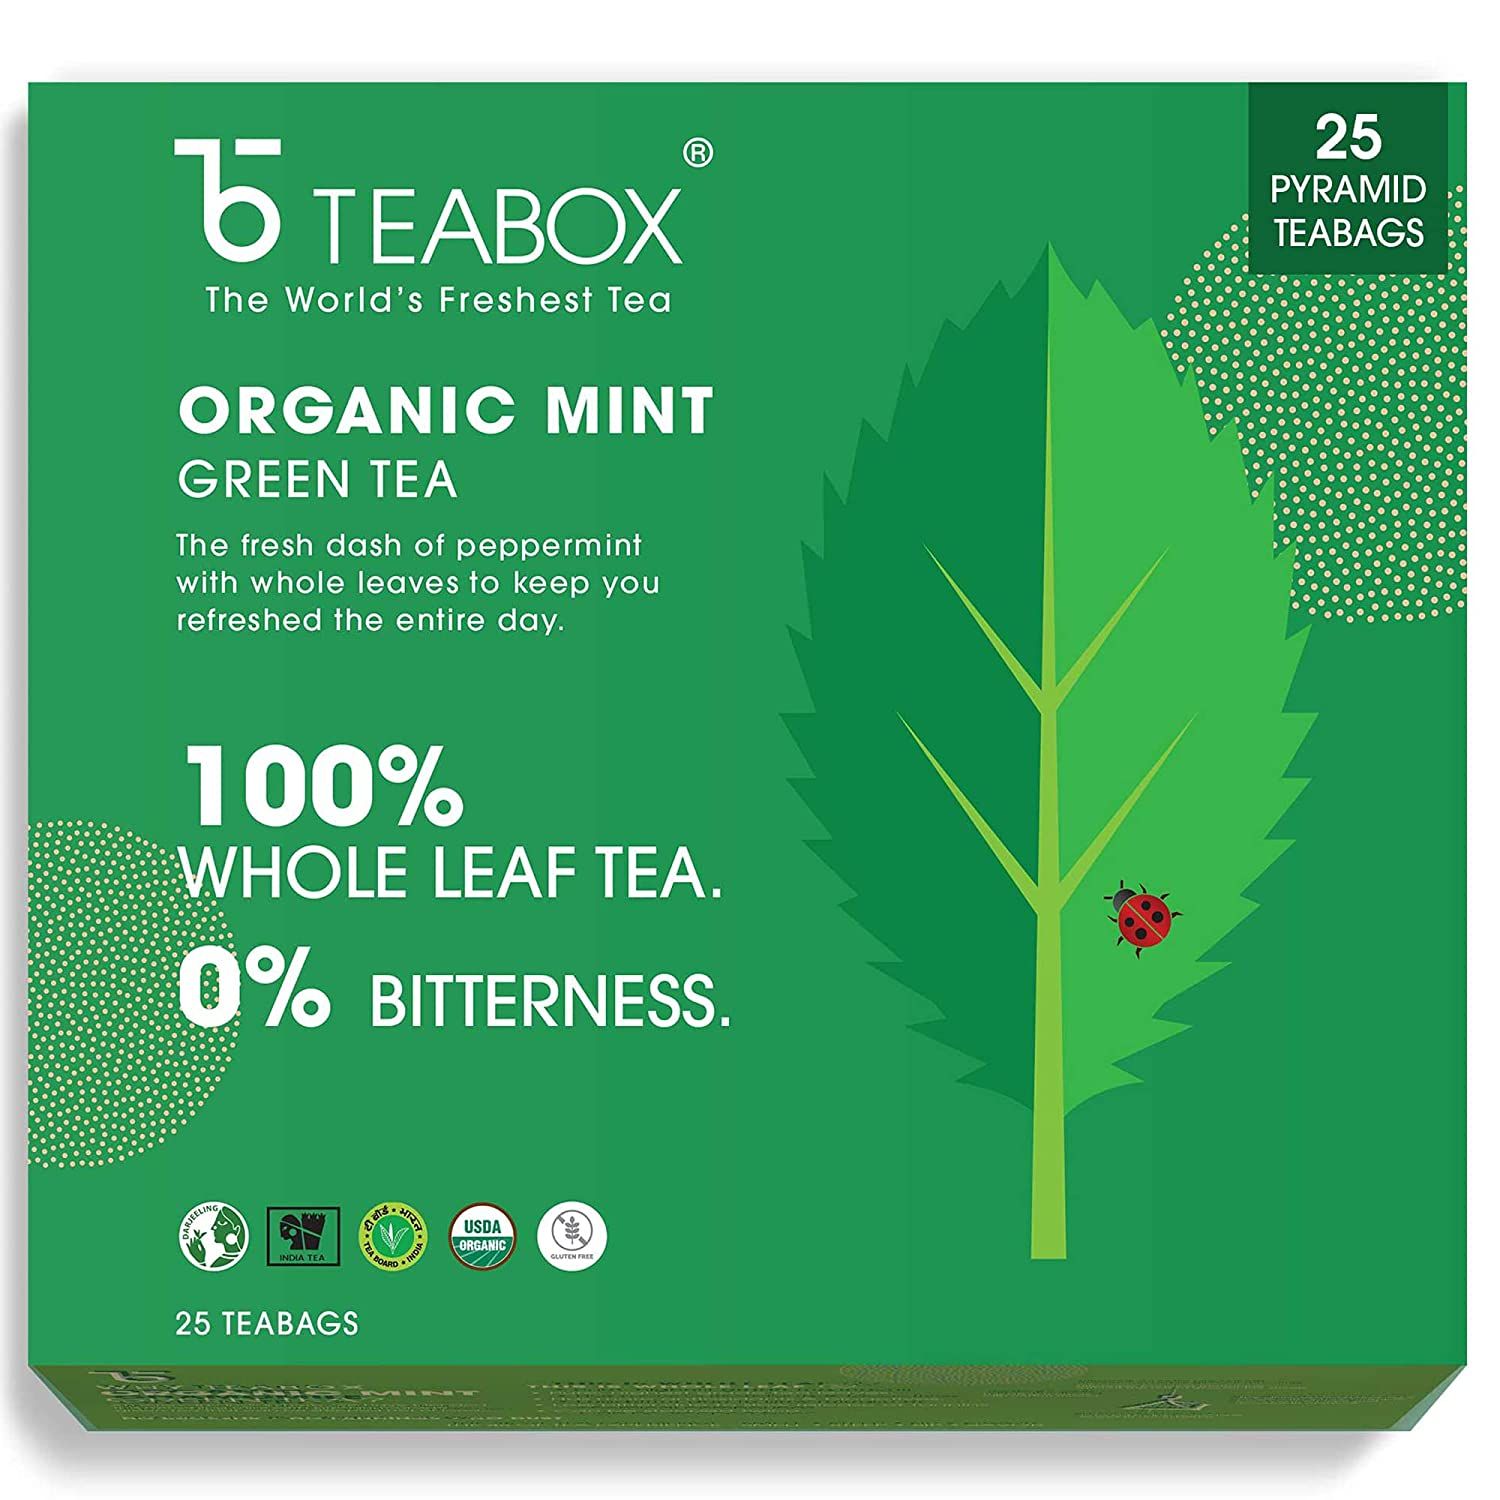 Teabox Organic Mint Green Tea Image